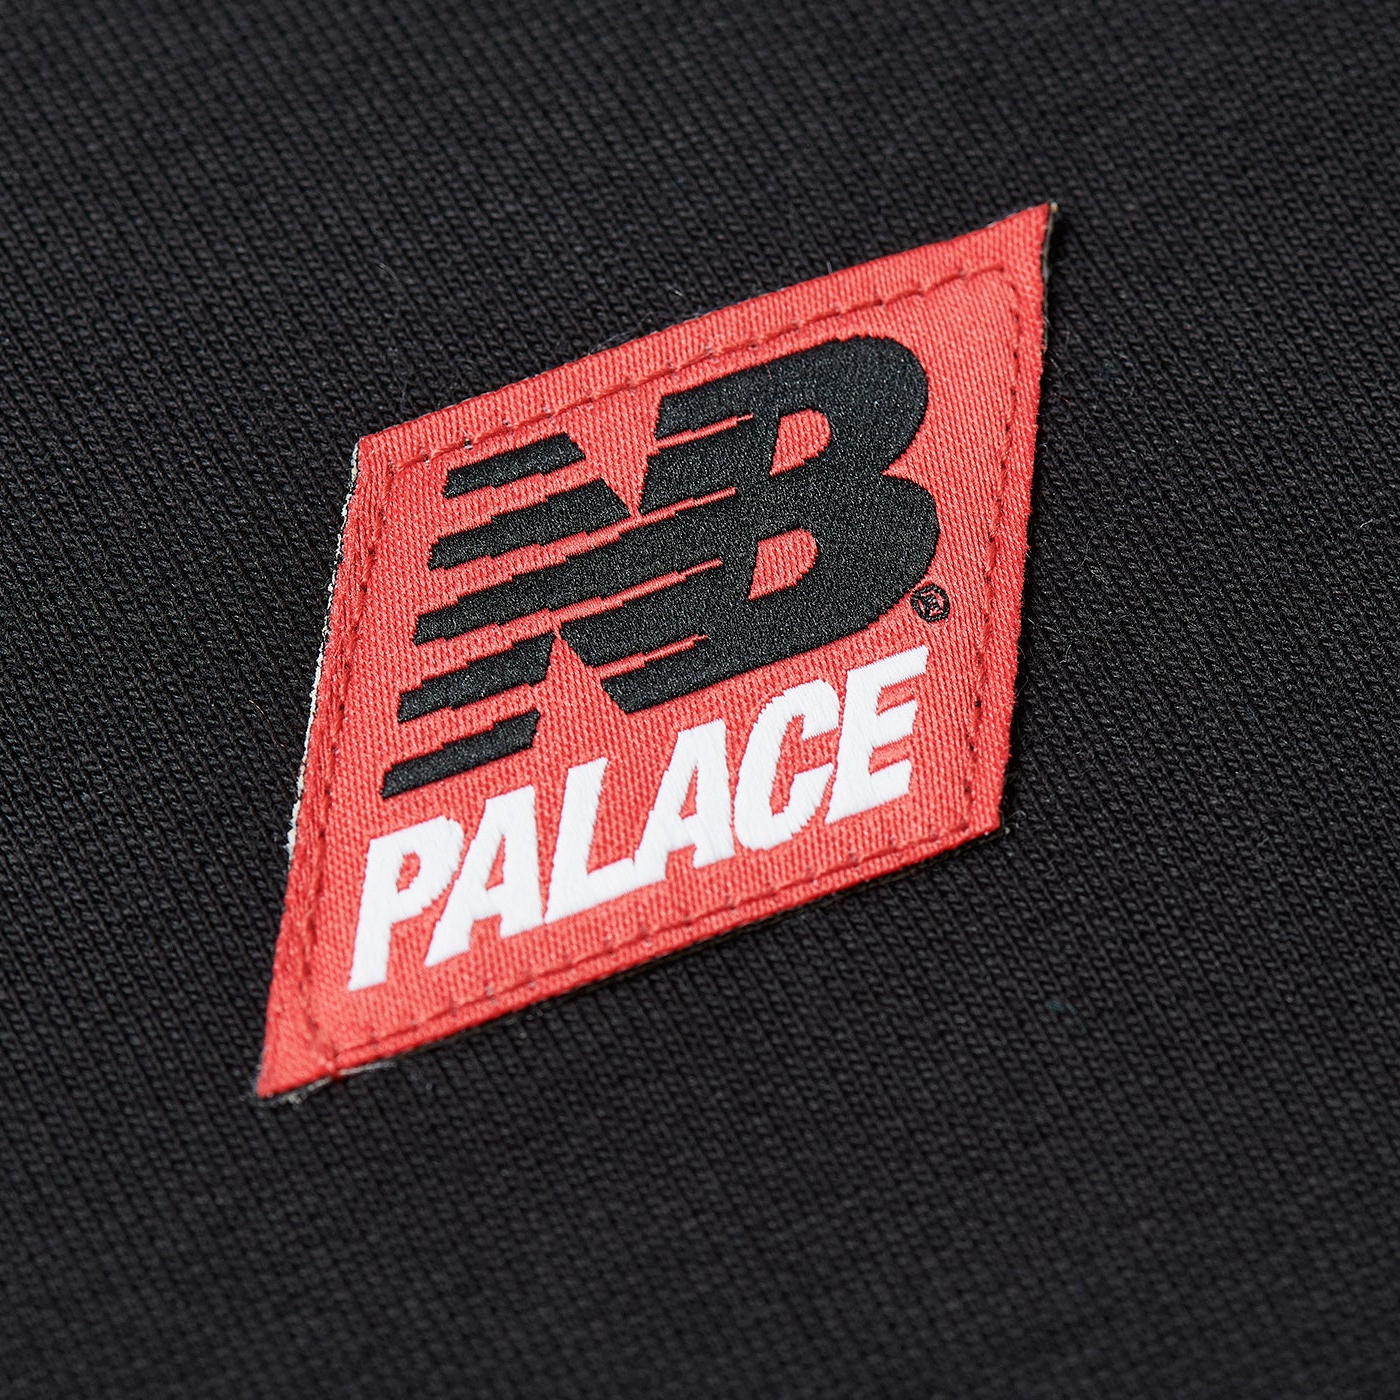 Thumbnail PALACE NEW BALANCE CREW BLACK one color